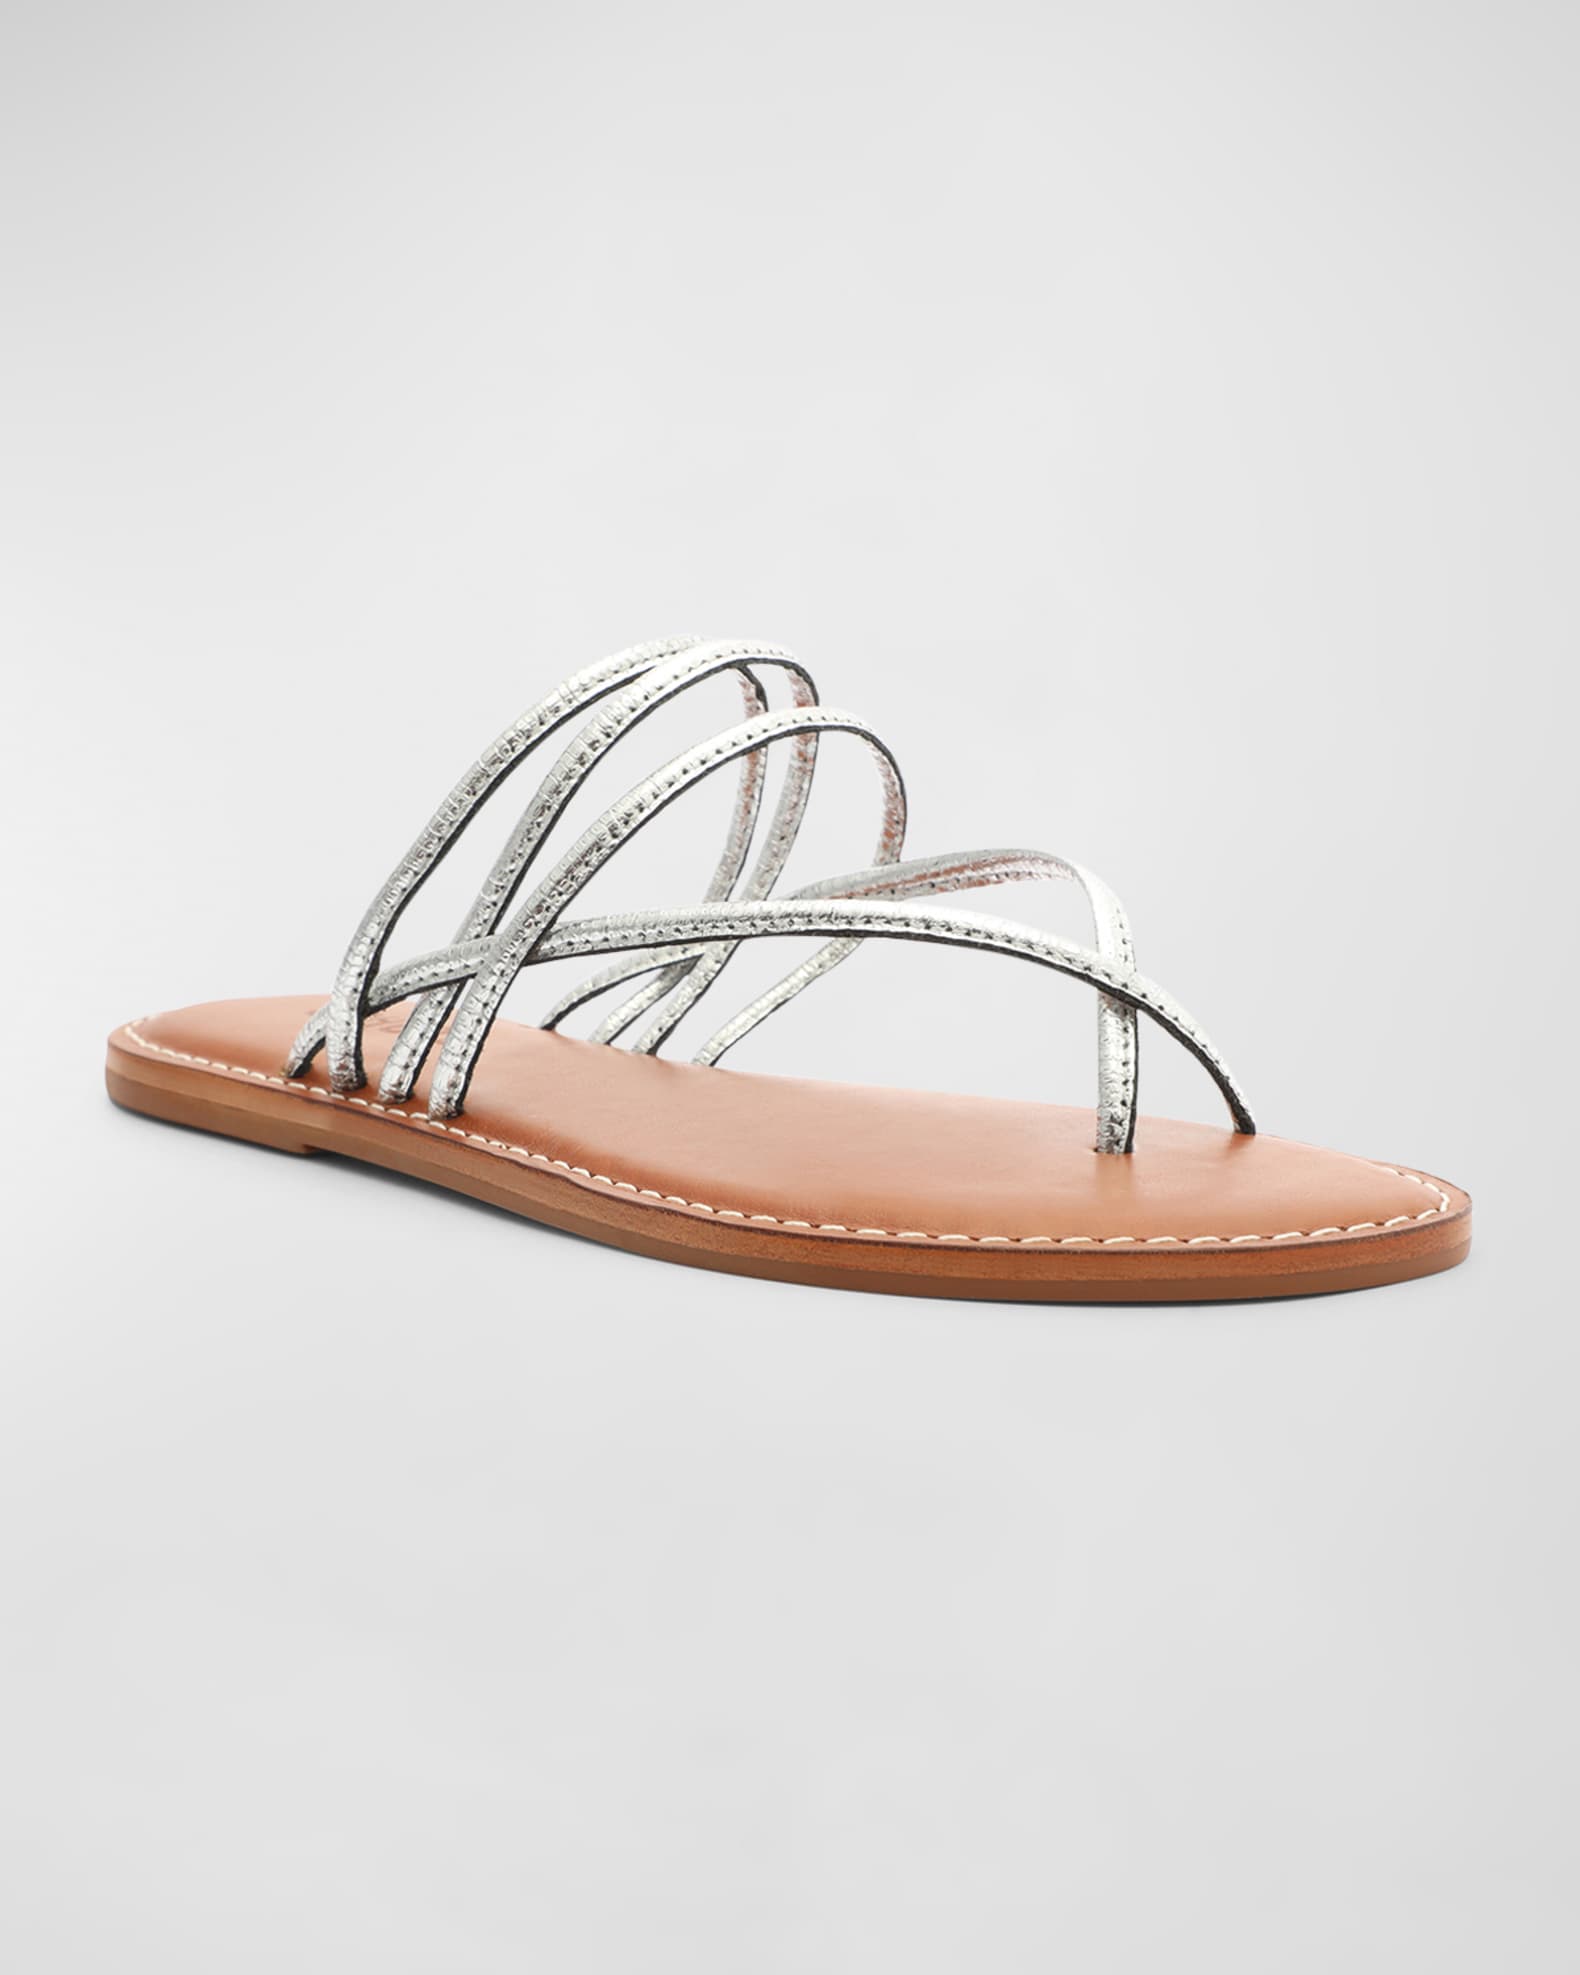 Schutz Mirielle Metallic Slide Sandals | Neiman Marcus